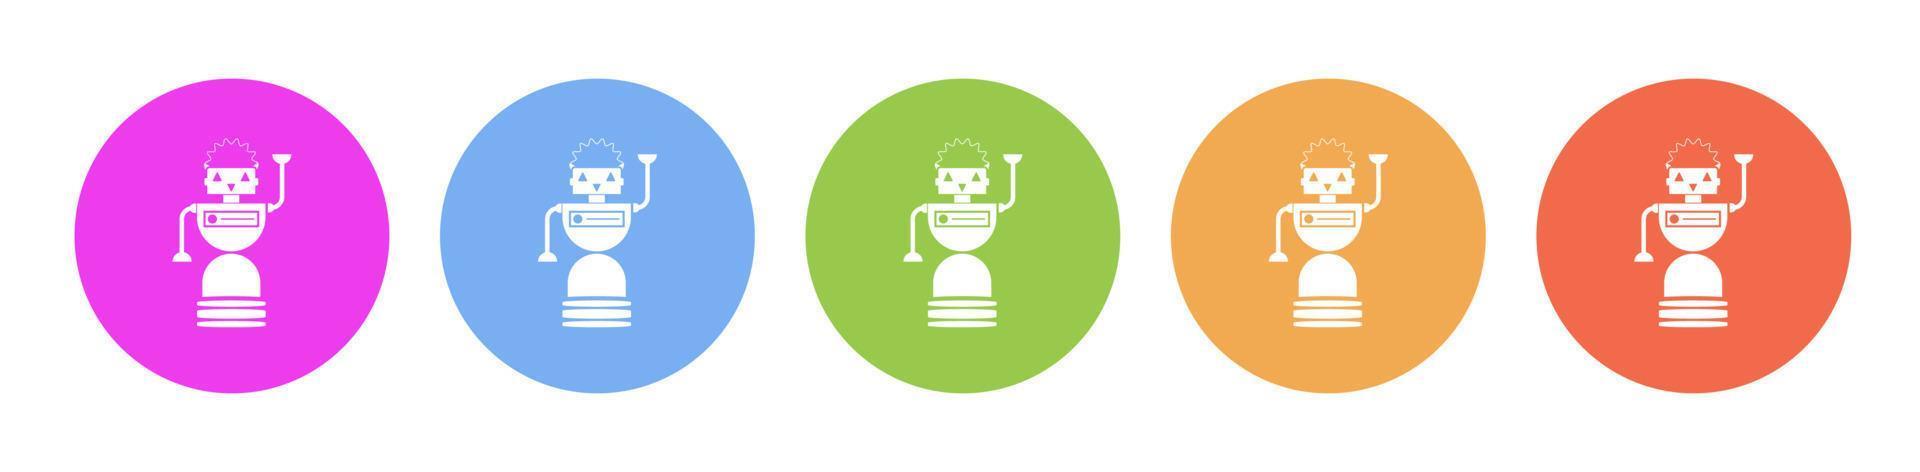 multi de colores icono robot tecnología. botón bandera redondo Insignia interfaz para solicitud ilustración en blanco antecedentes vector